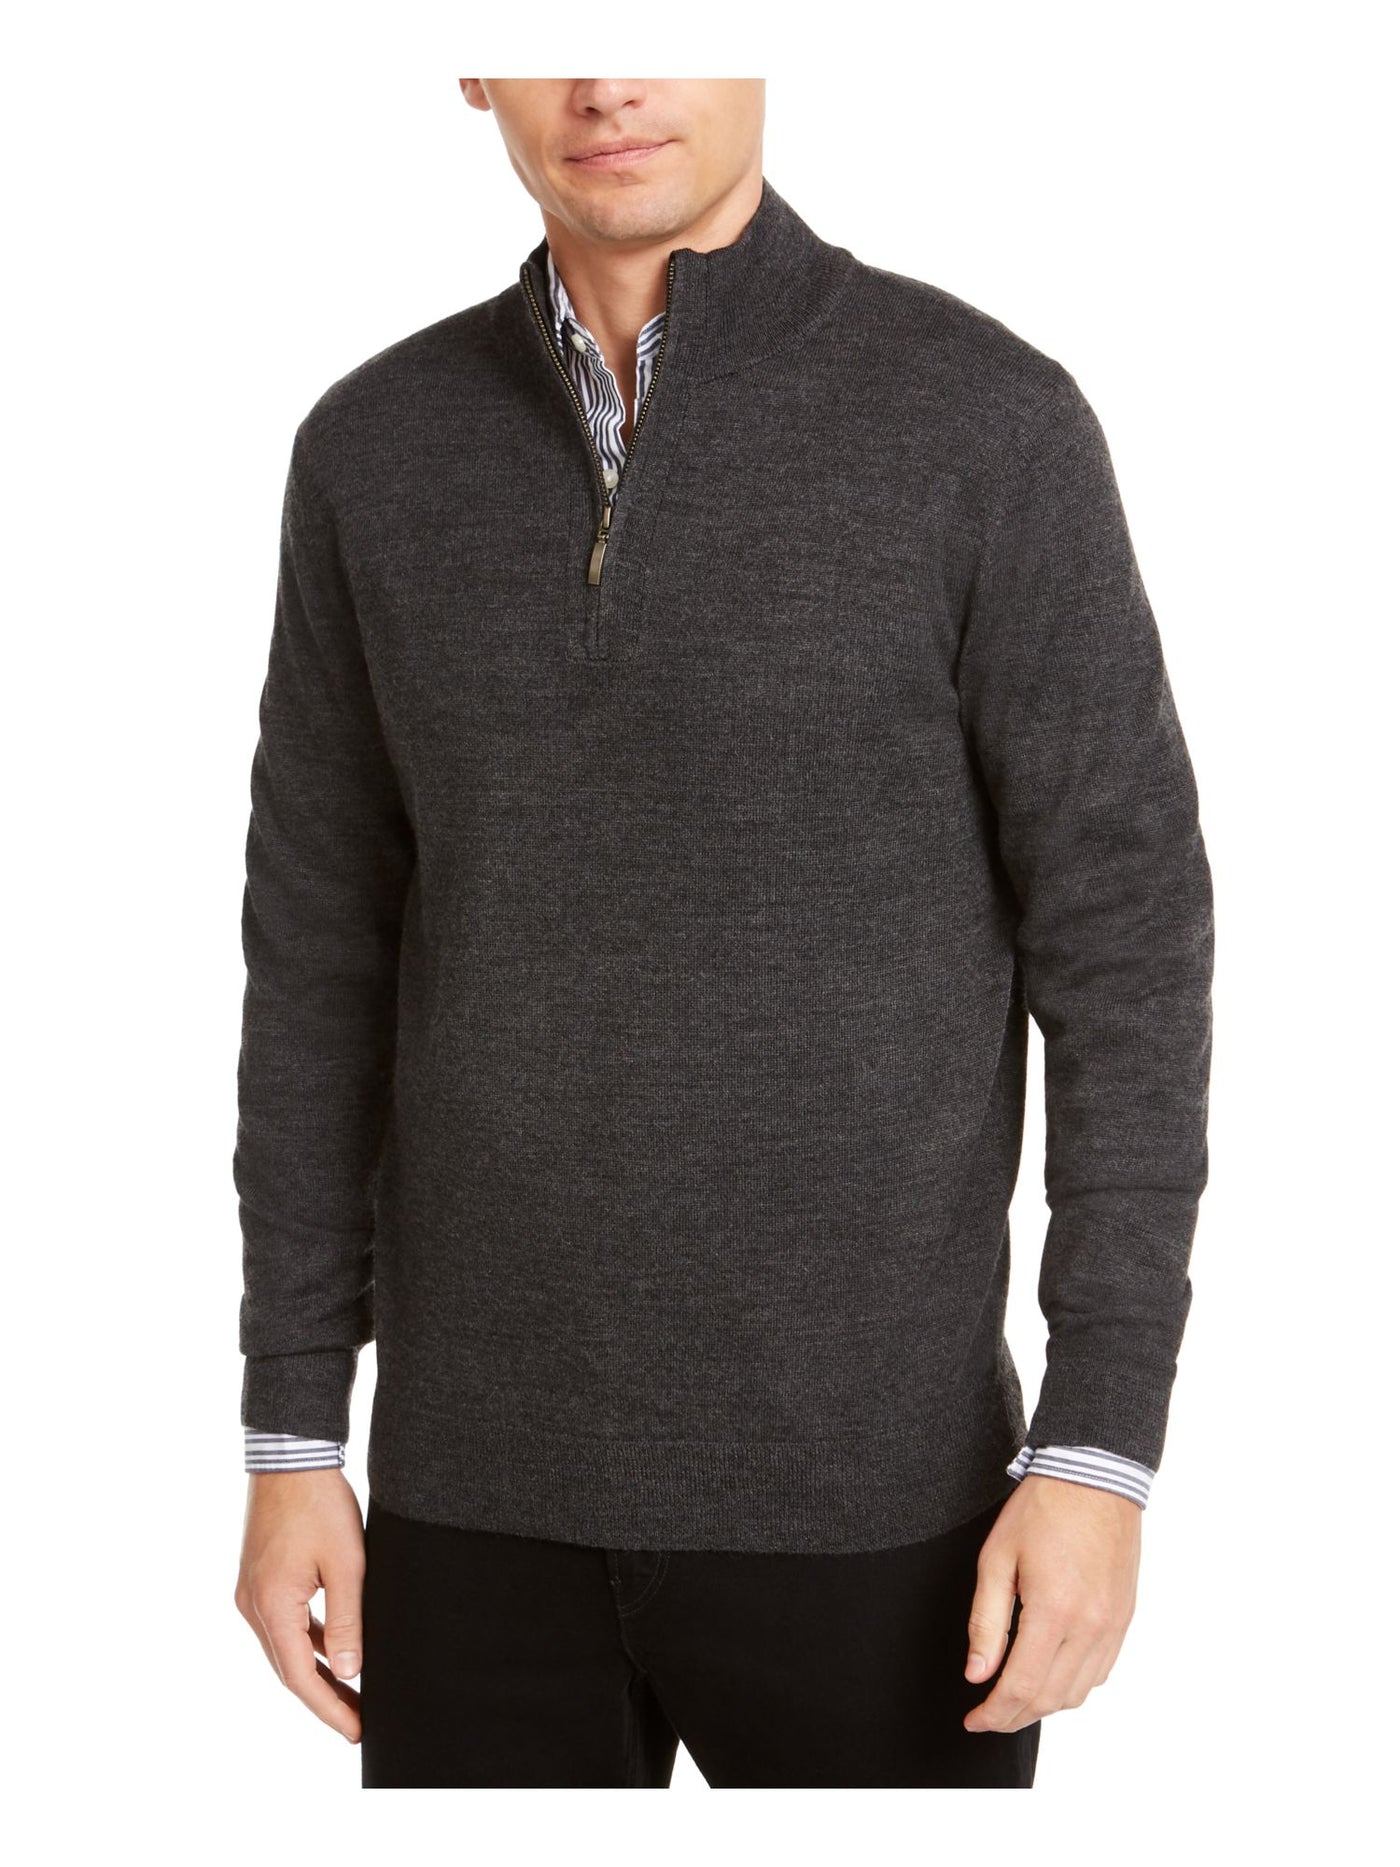 CLUBROOM Mens Gray Quarter-Zip Pullover Sweater S